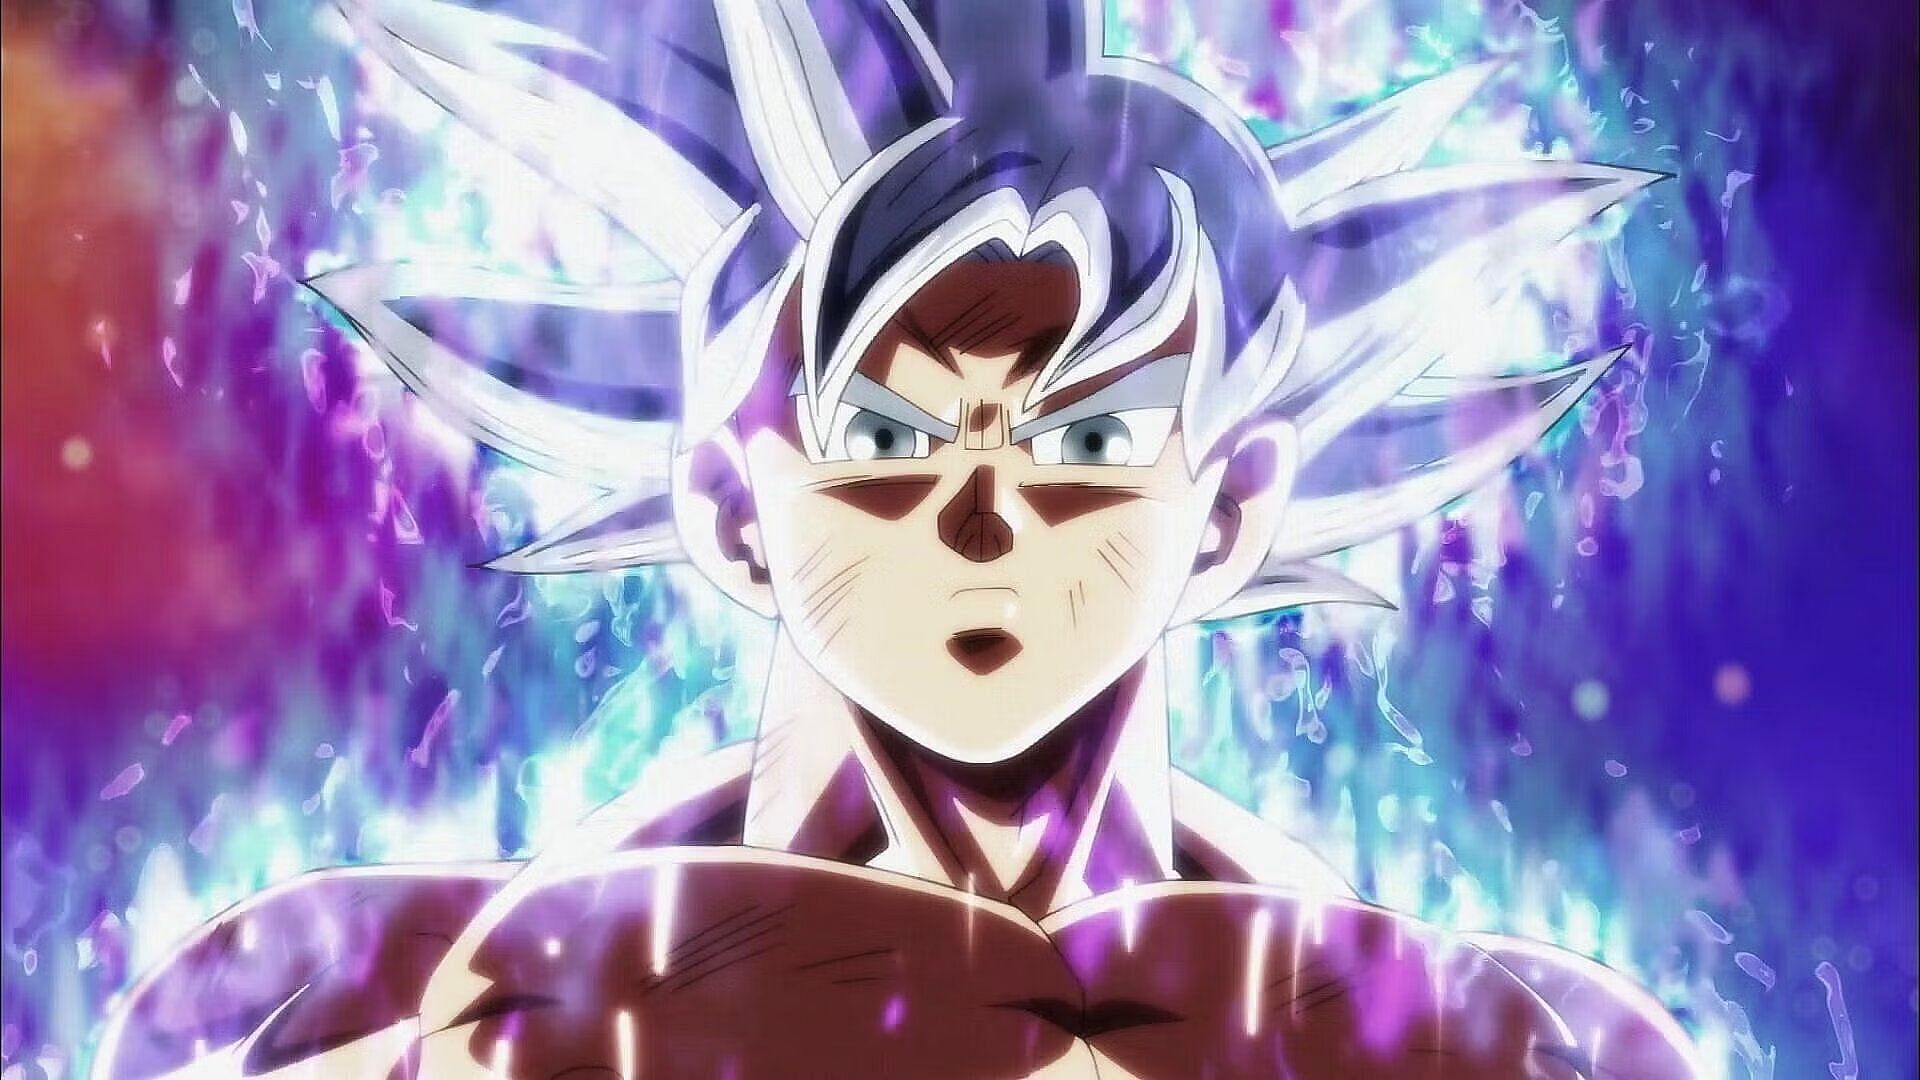 Goku using Ultra Instinct in the anime (Image via Toei Animation)